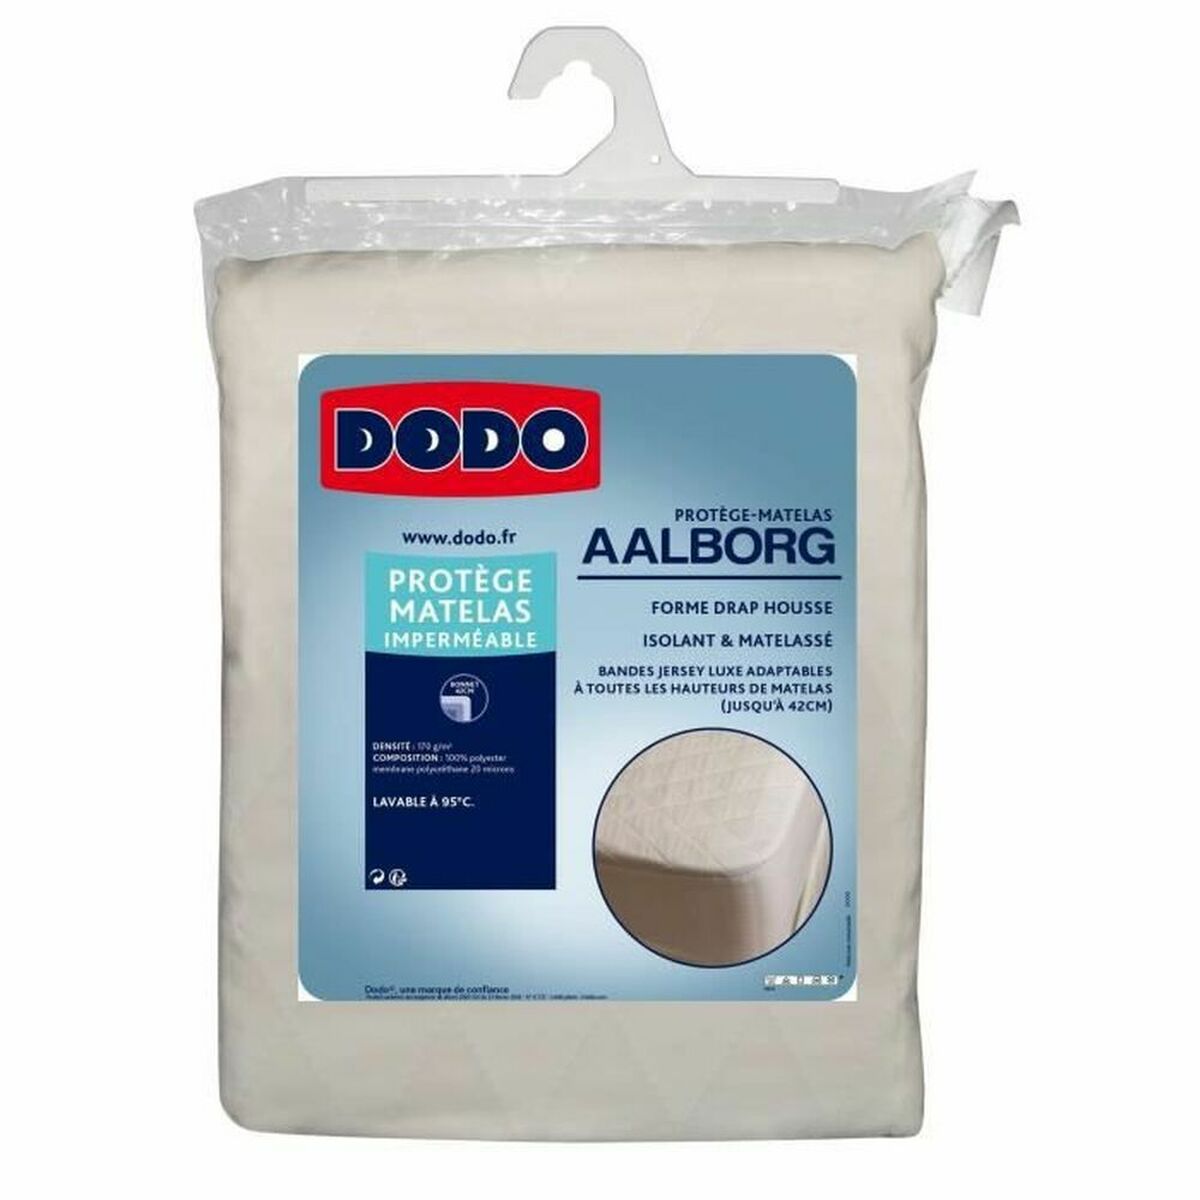 Protecteur de matelas DODO Aalborg (90 x 190)